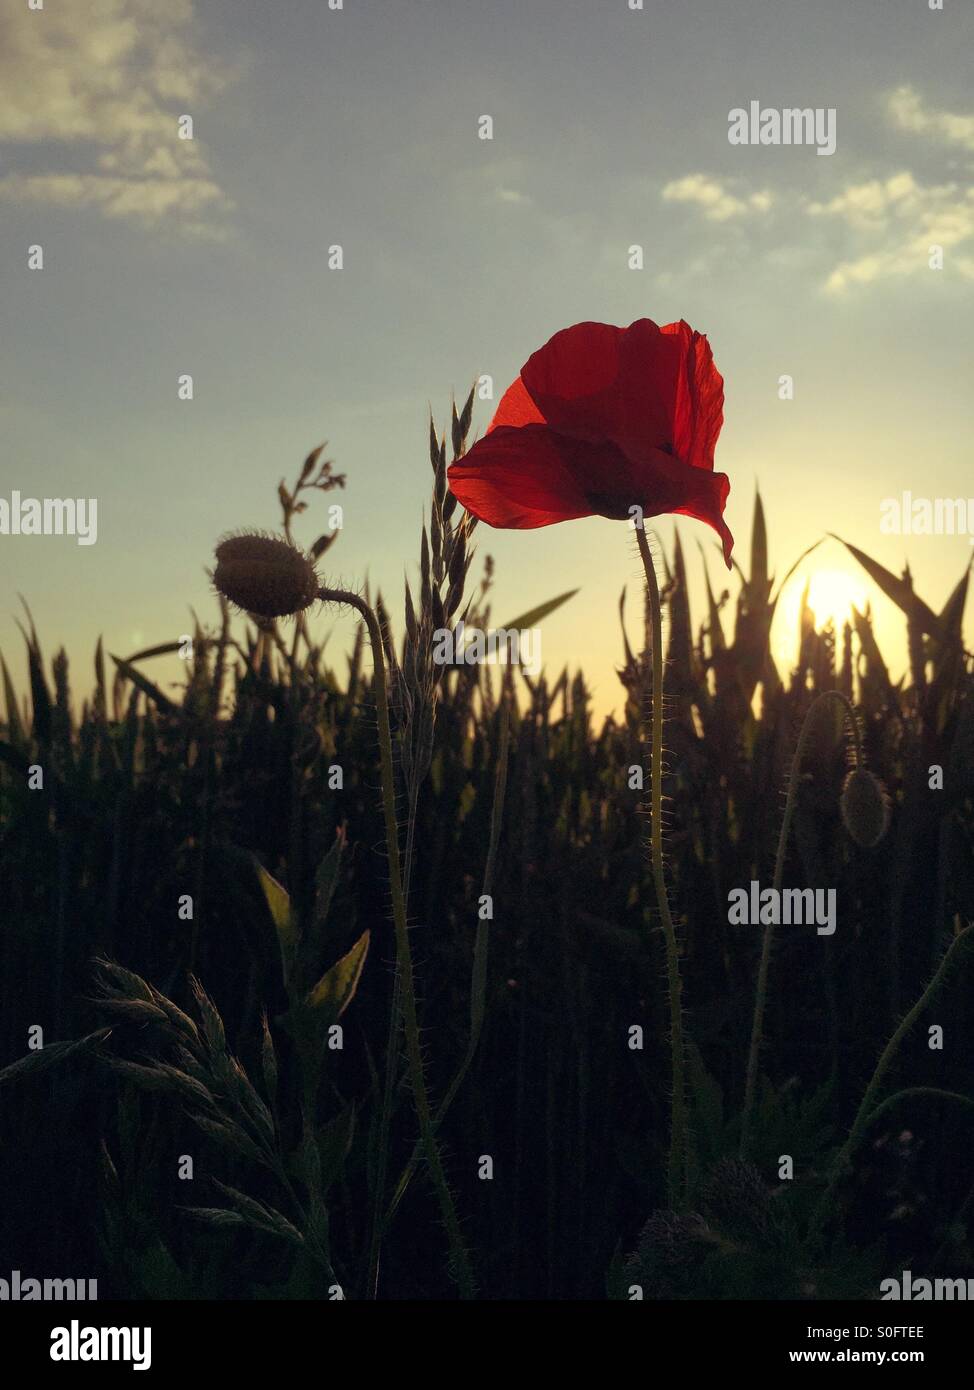 Poppy in a field in the evening sun Stock Photo